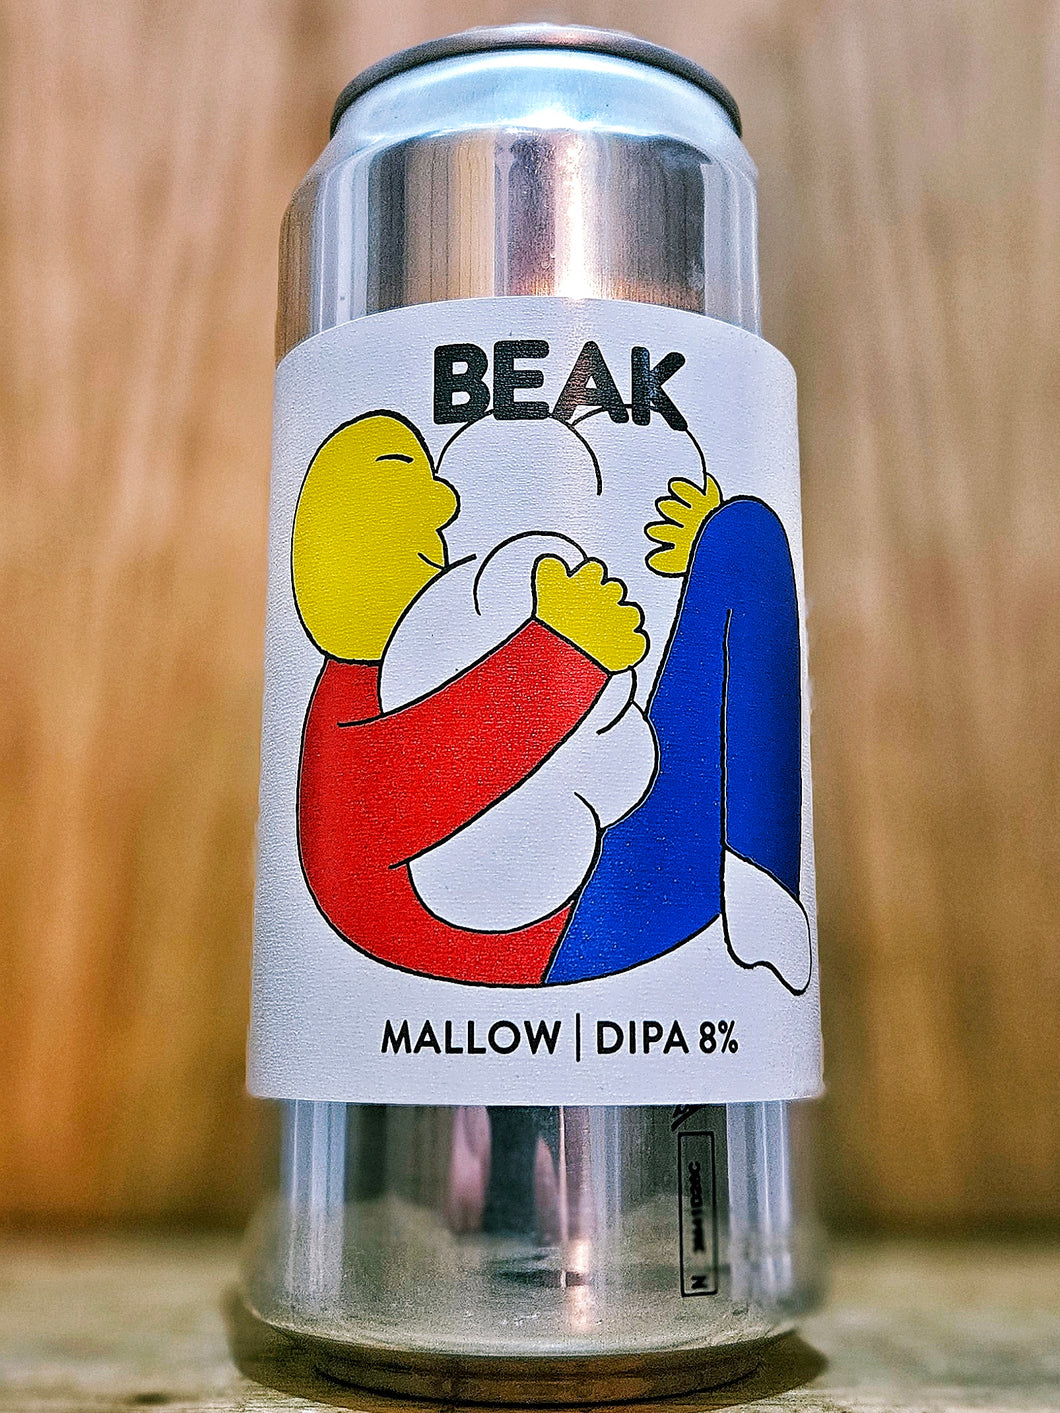 Beak Brewery - Mallow